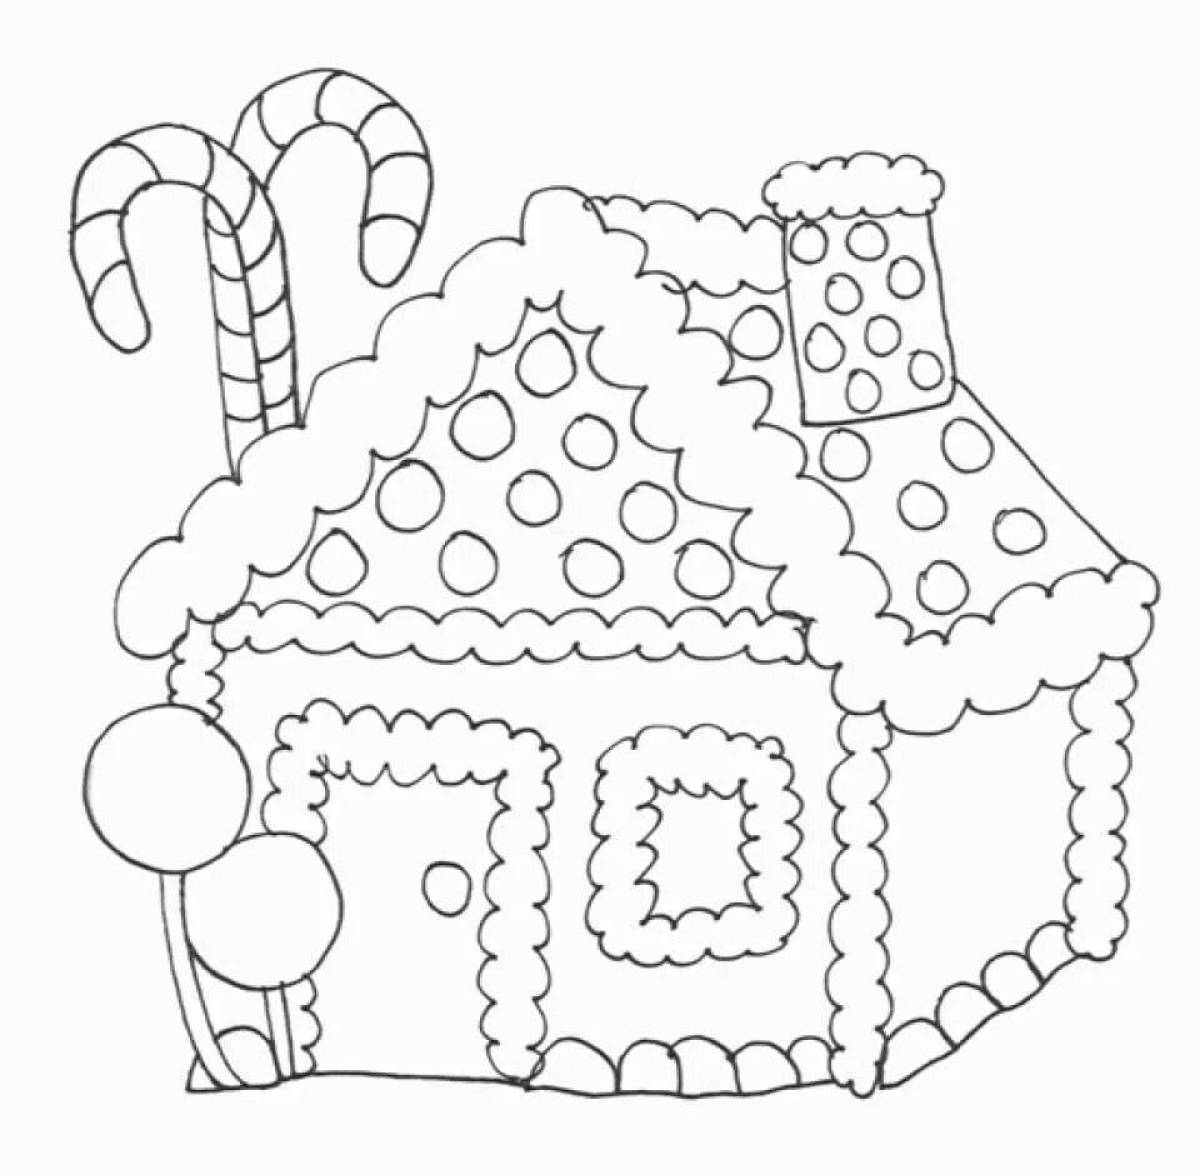 Luminous Christmas gingerbread house coloring book